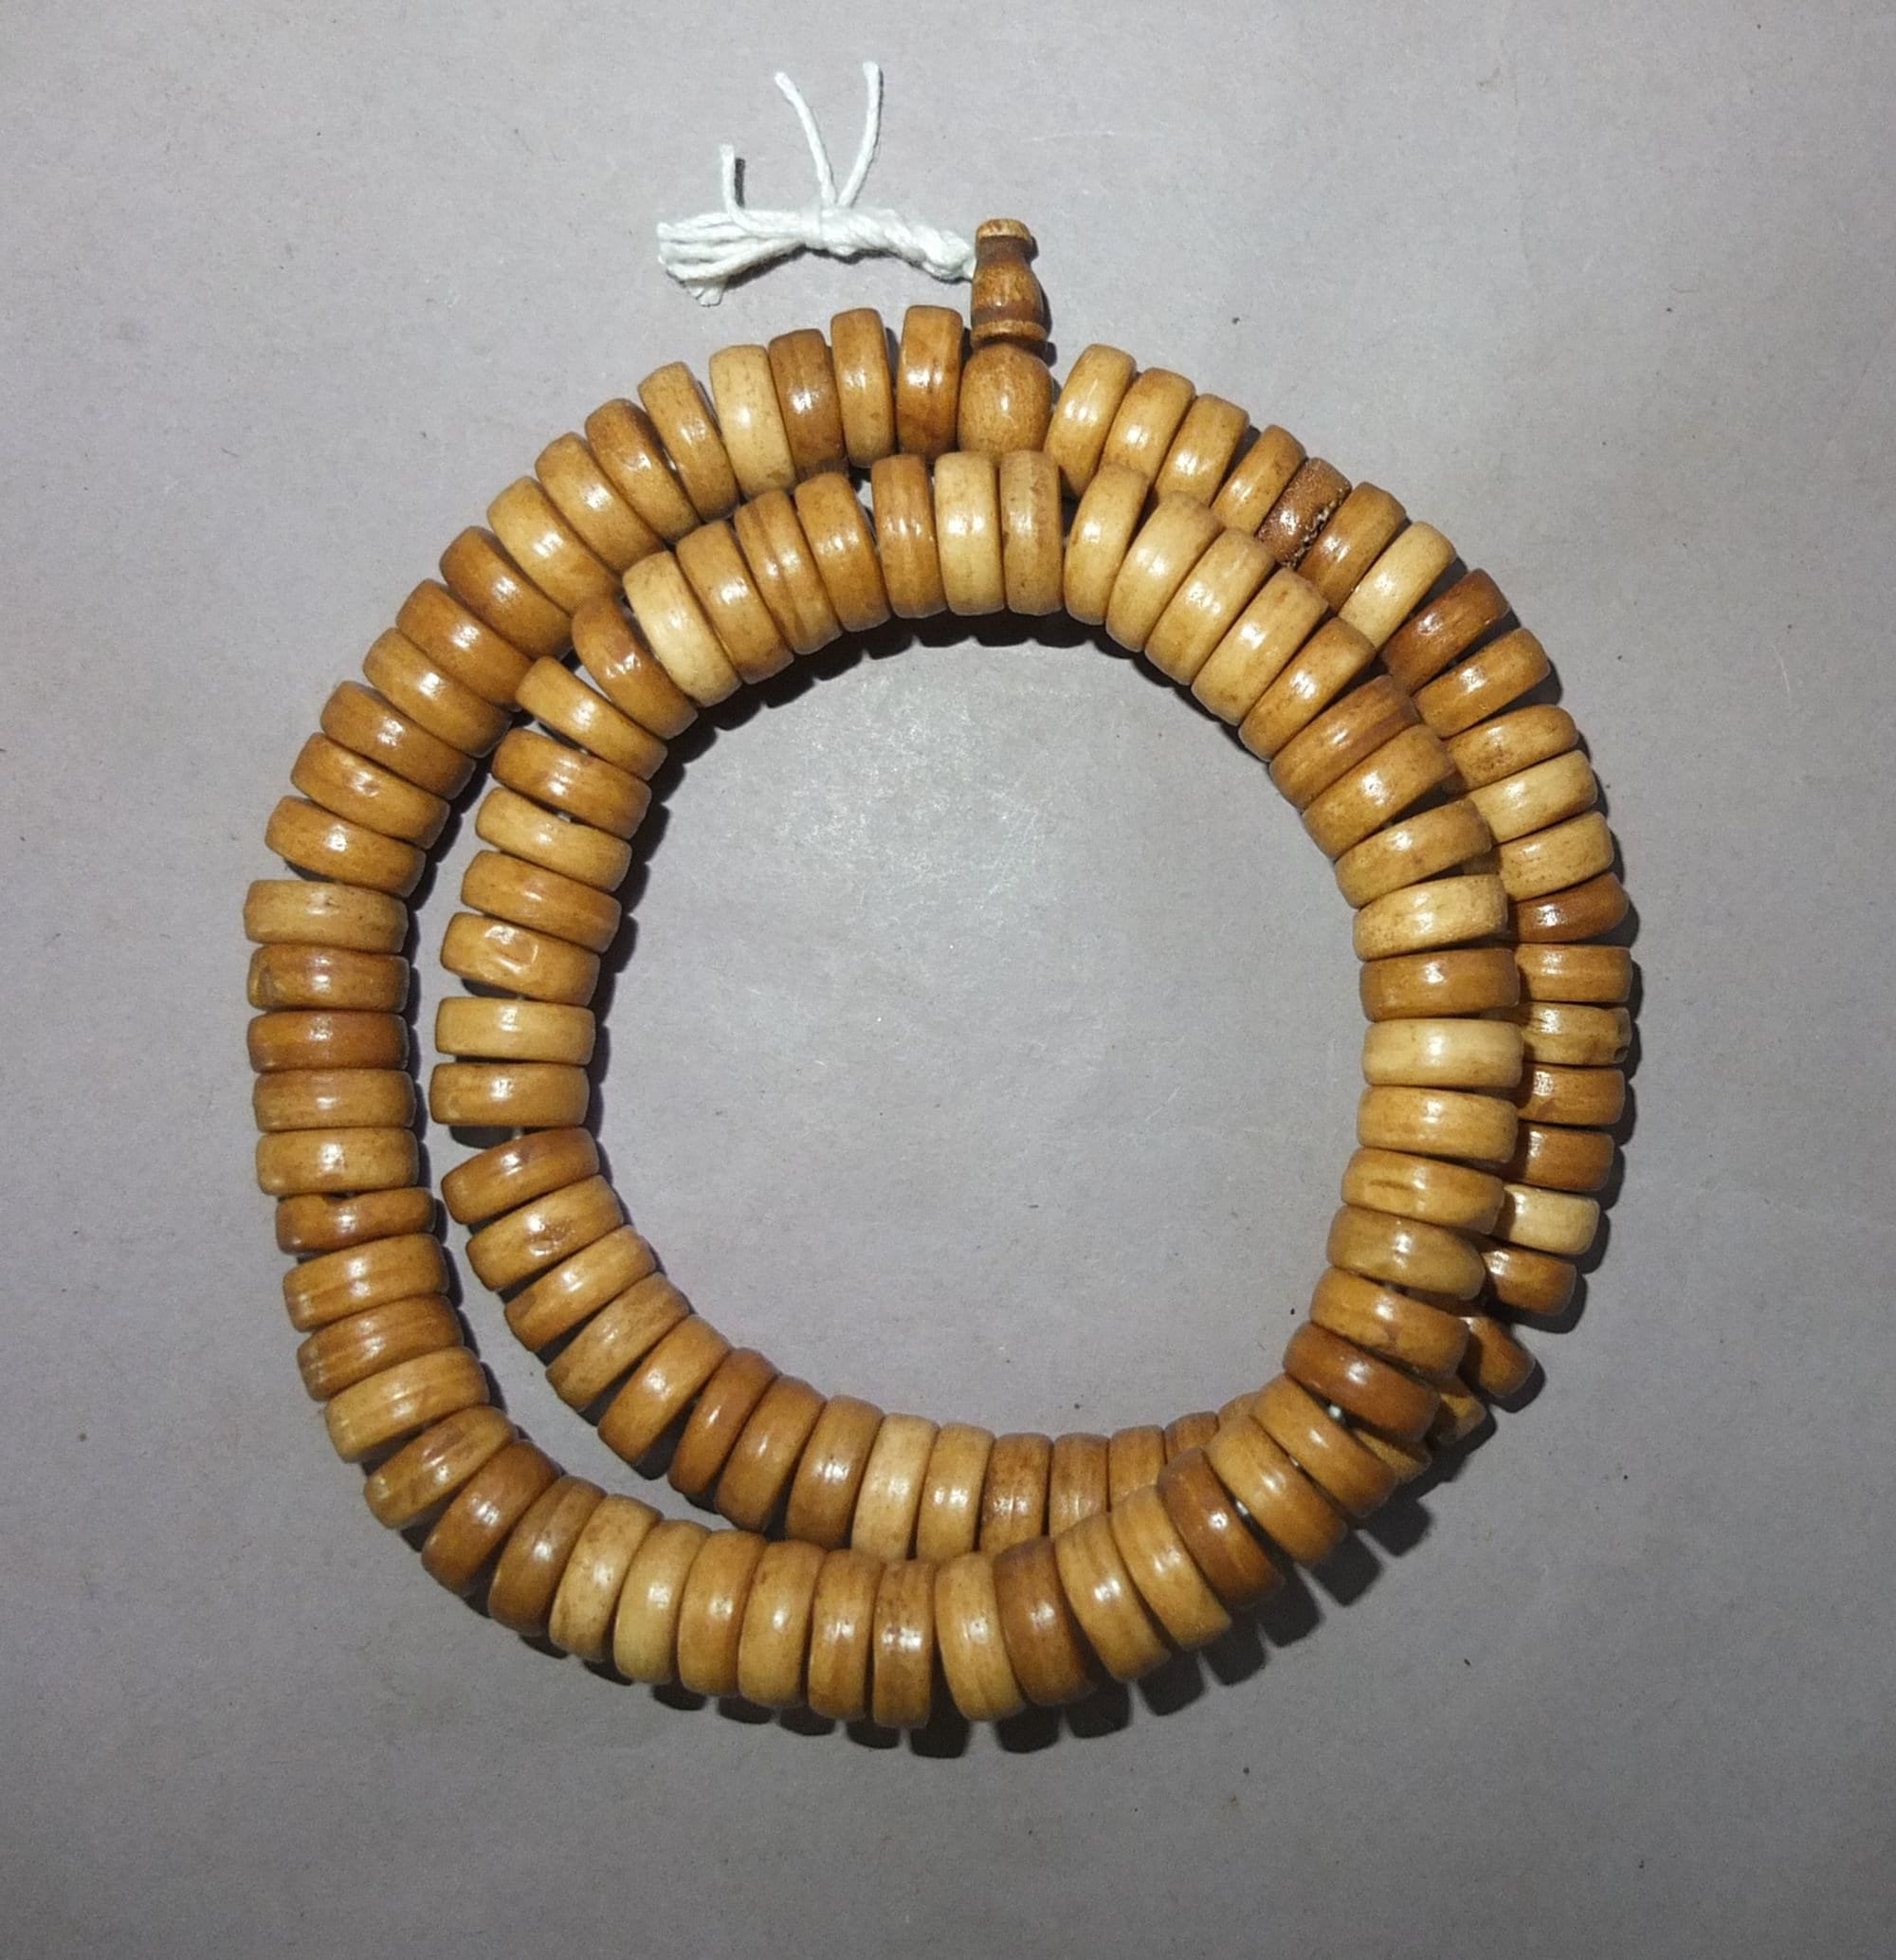 Tibetan Camel Bone 108 Mala Beads Buddha Bracelet / Necklace – MR